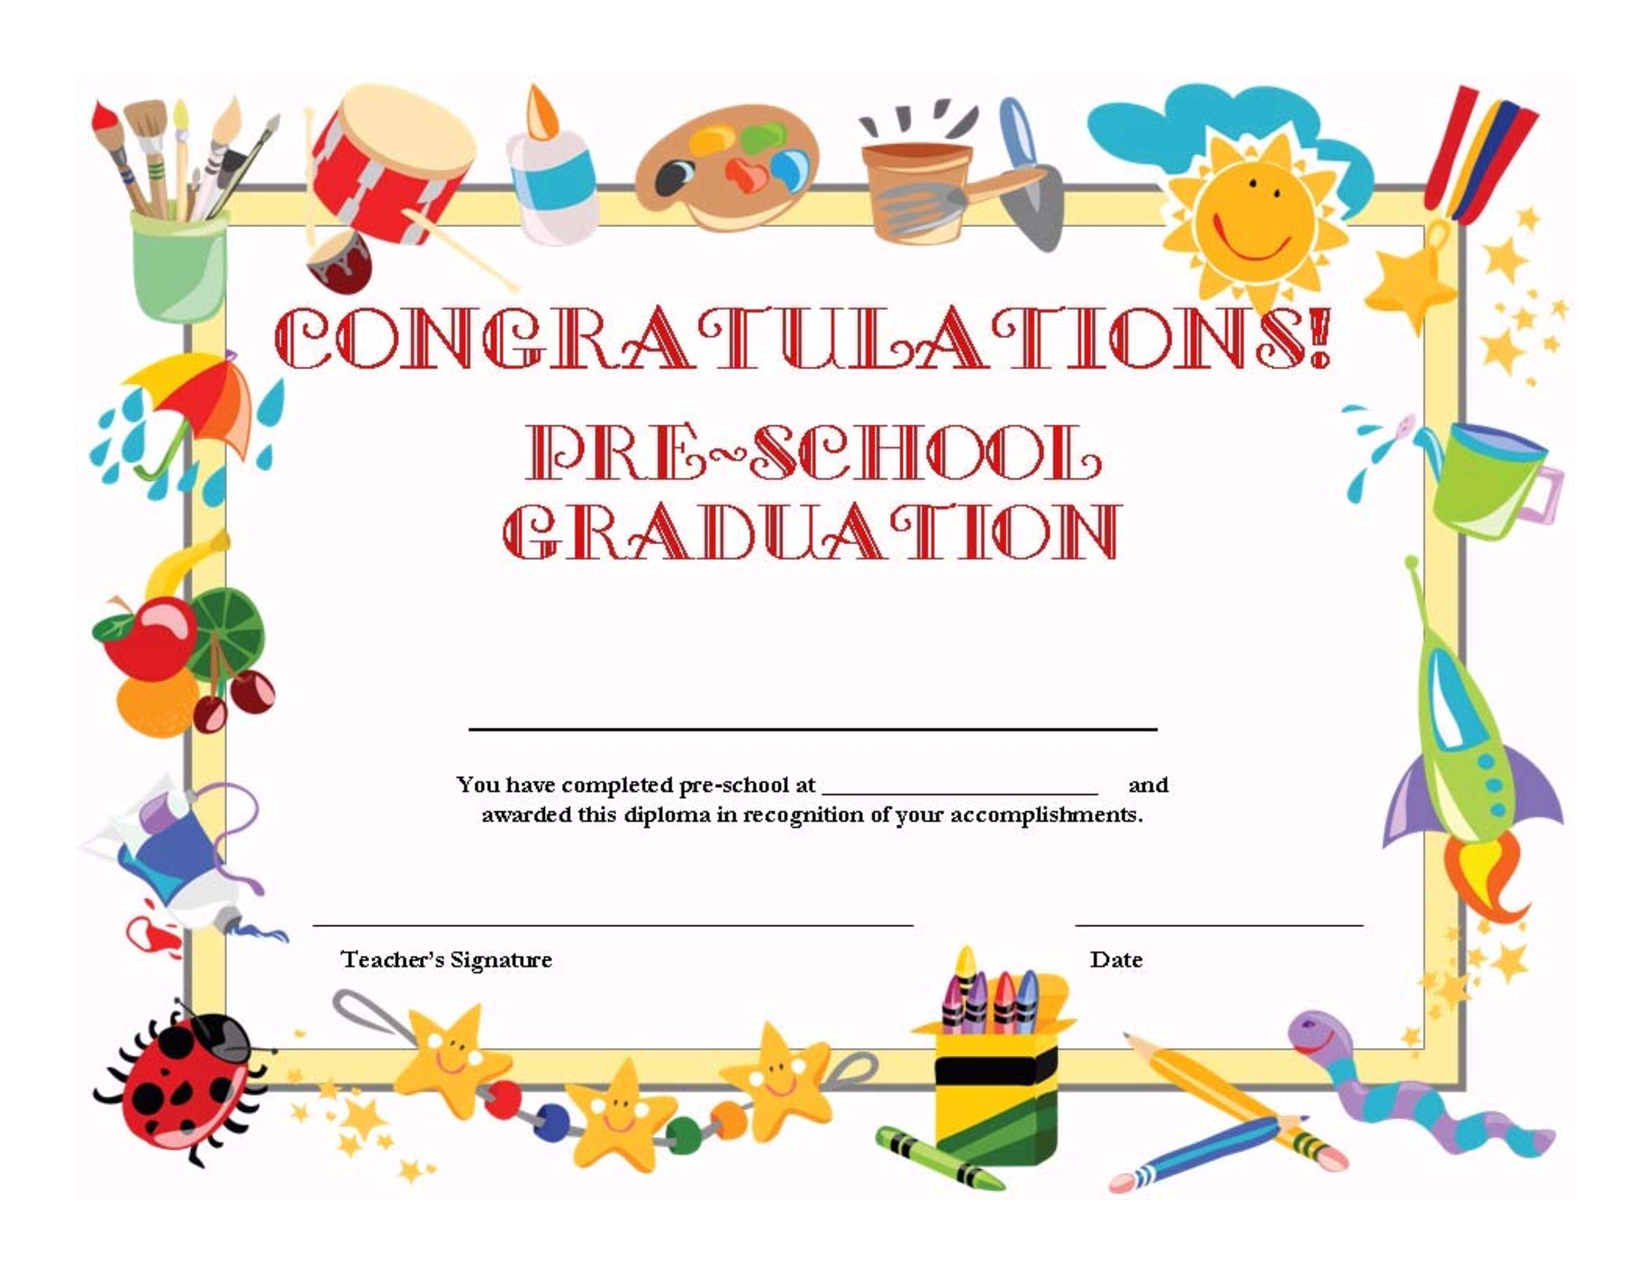 Preschool Graduation Certificate Template Free | Graduation Intended For Preschool Graduation Certificate Template Free